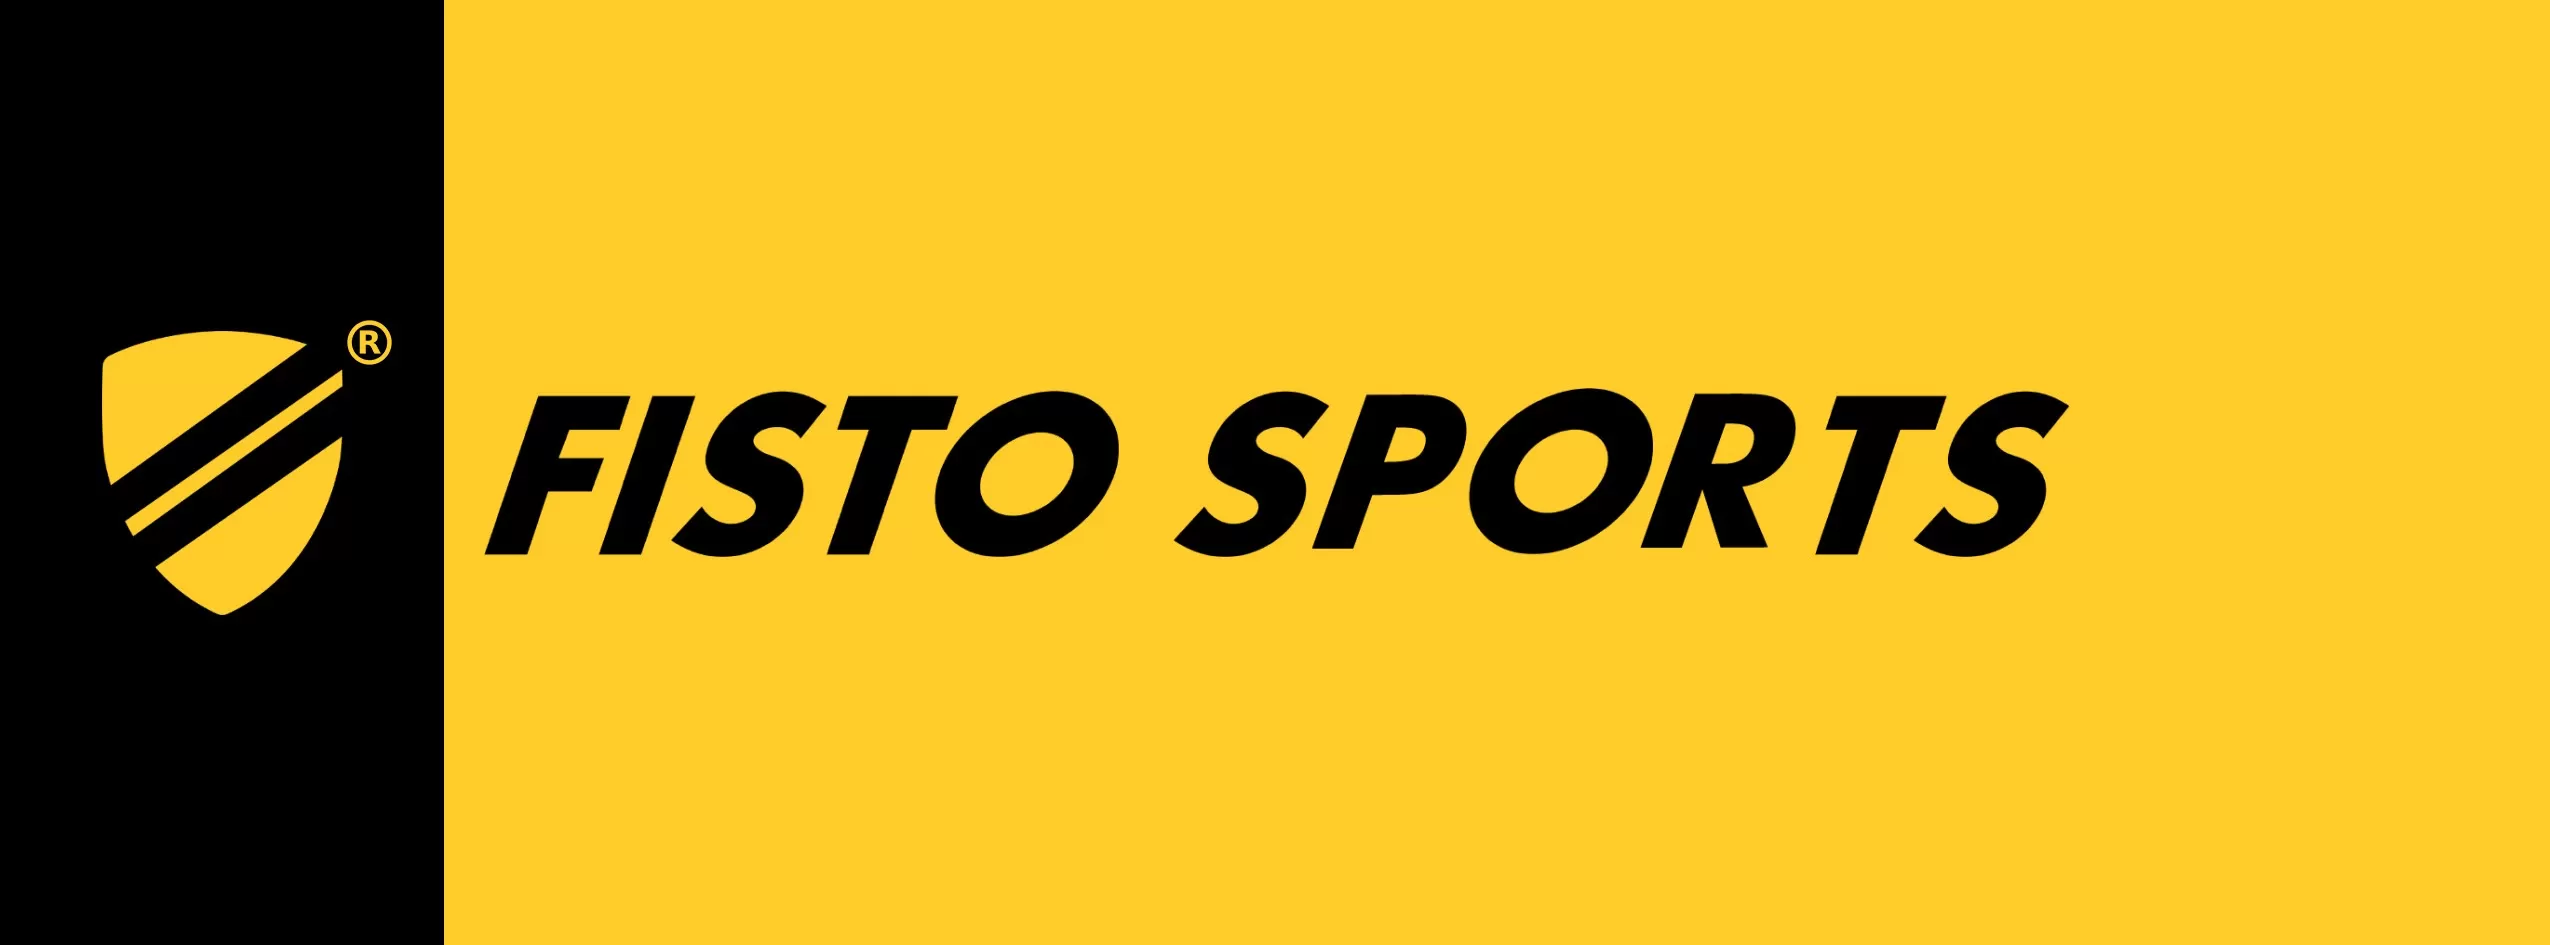 Fisto Sports Advertising